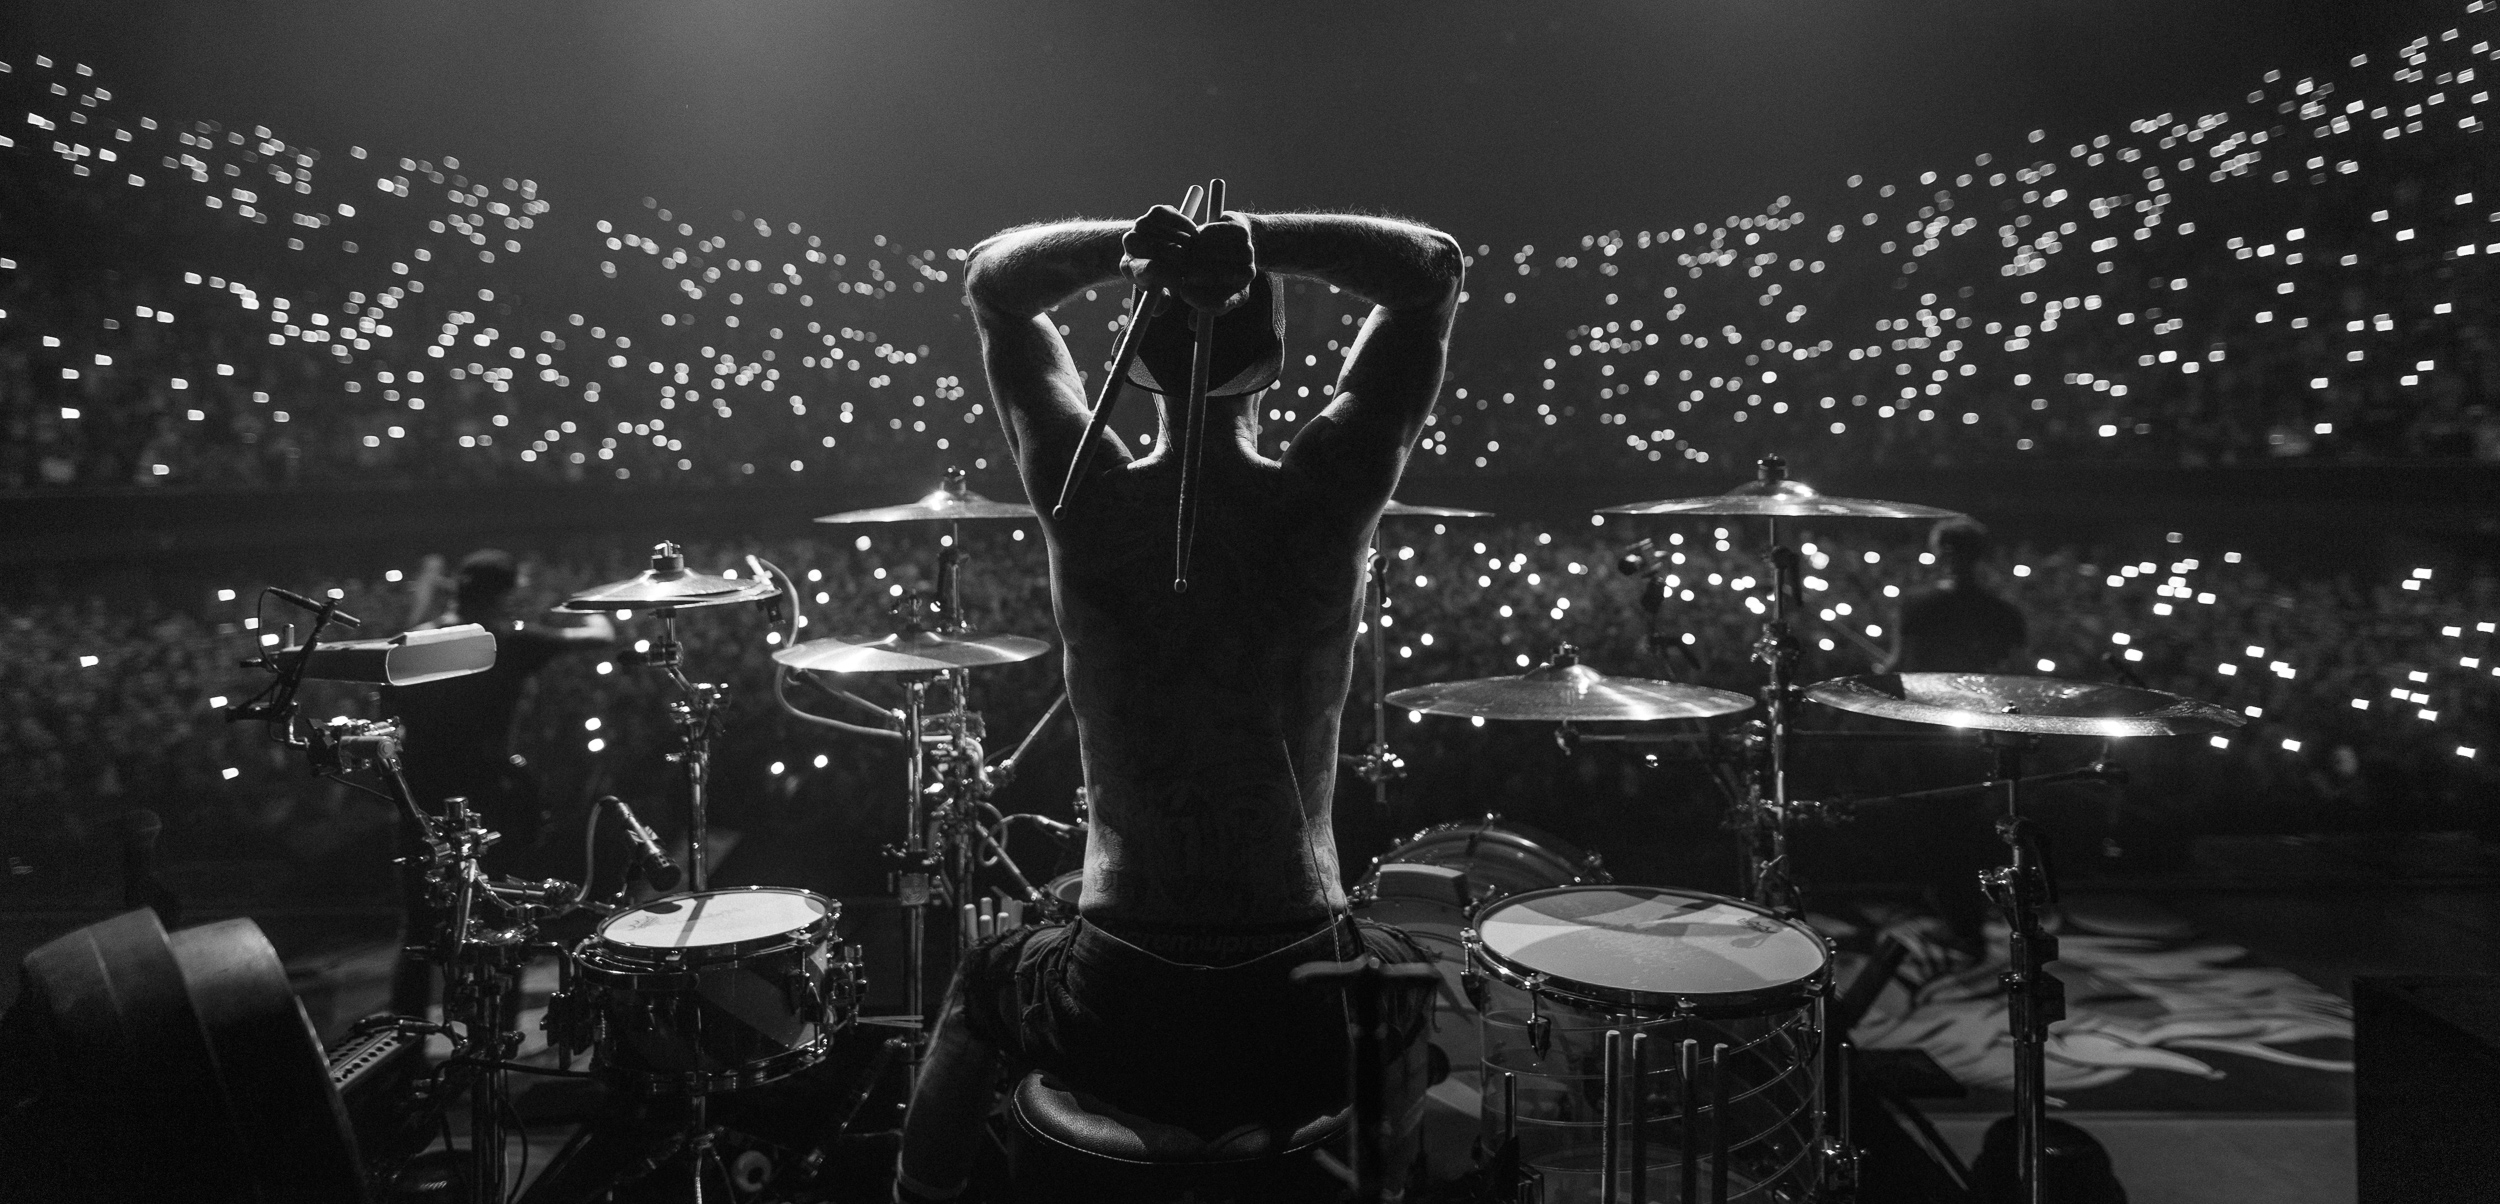 Travis Barker of Blink-182 by Adam Elmakias